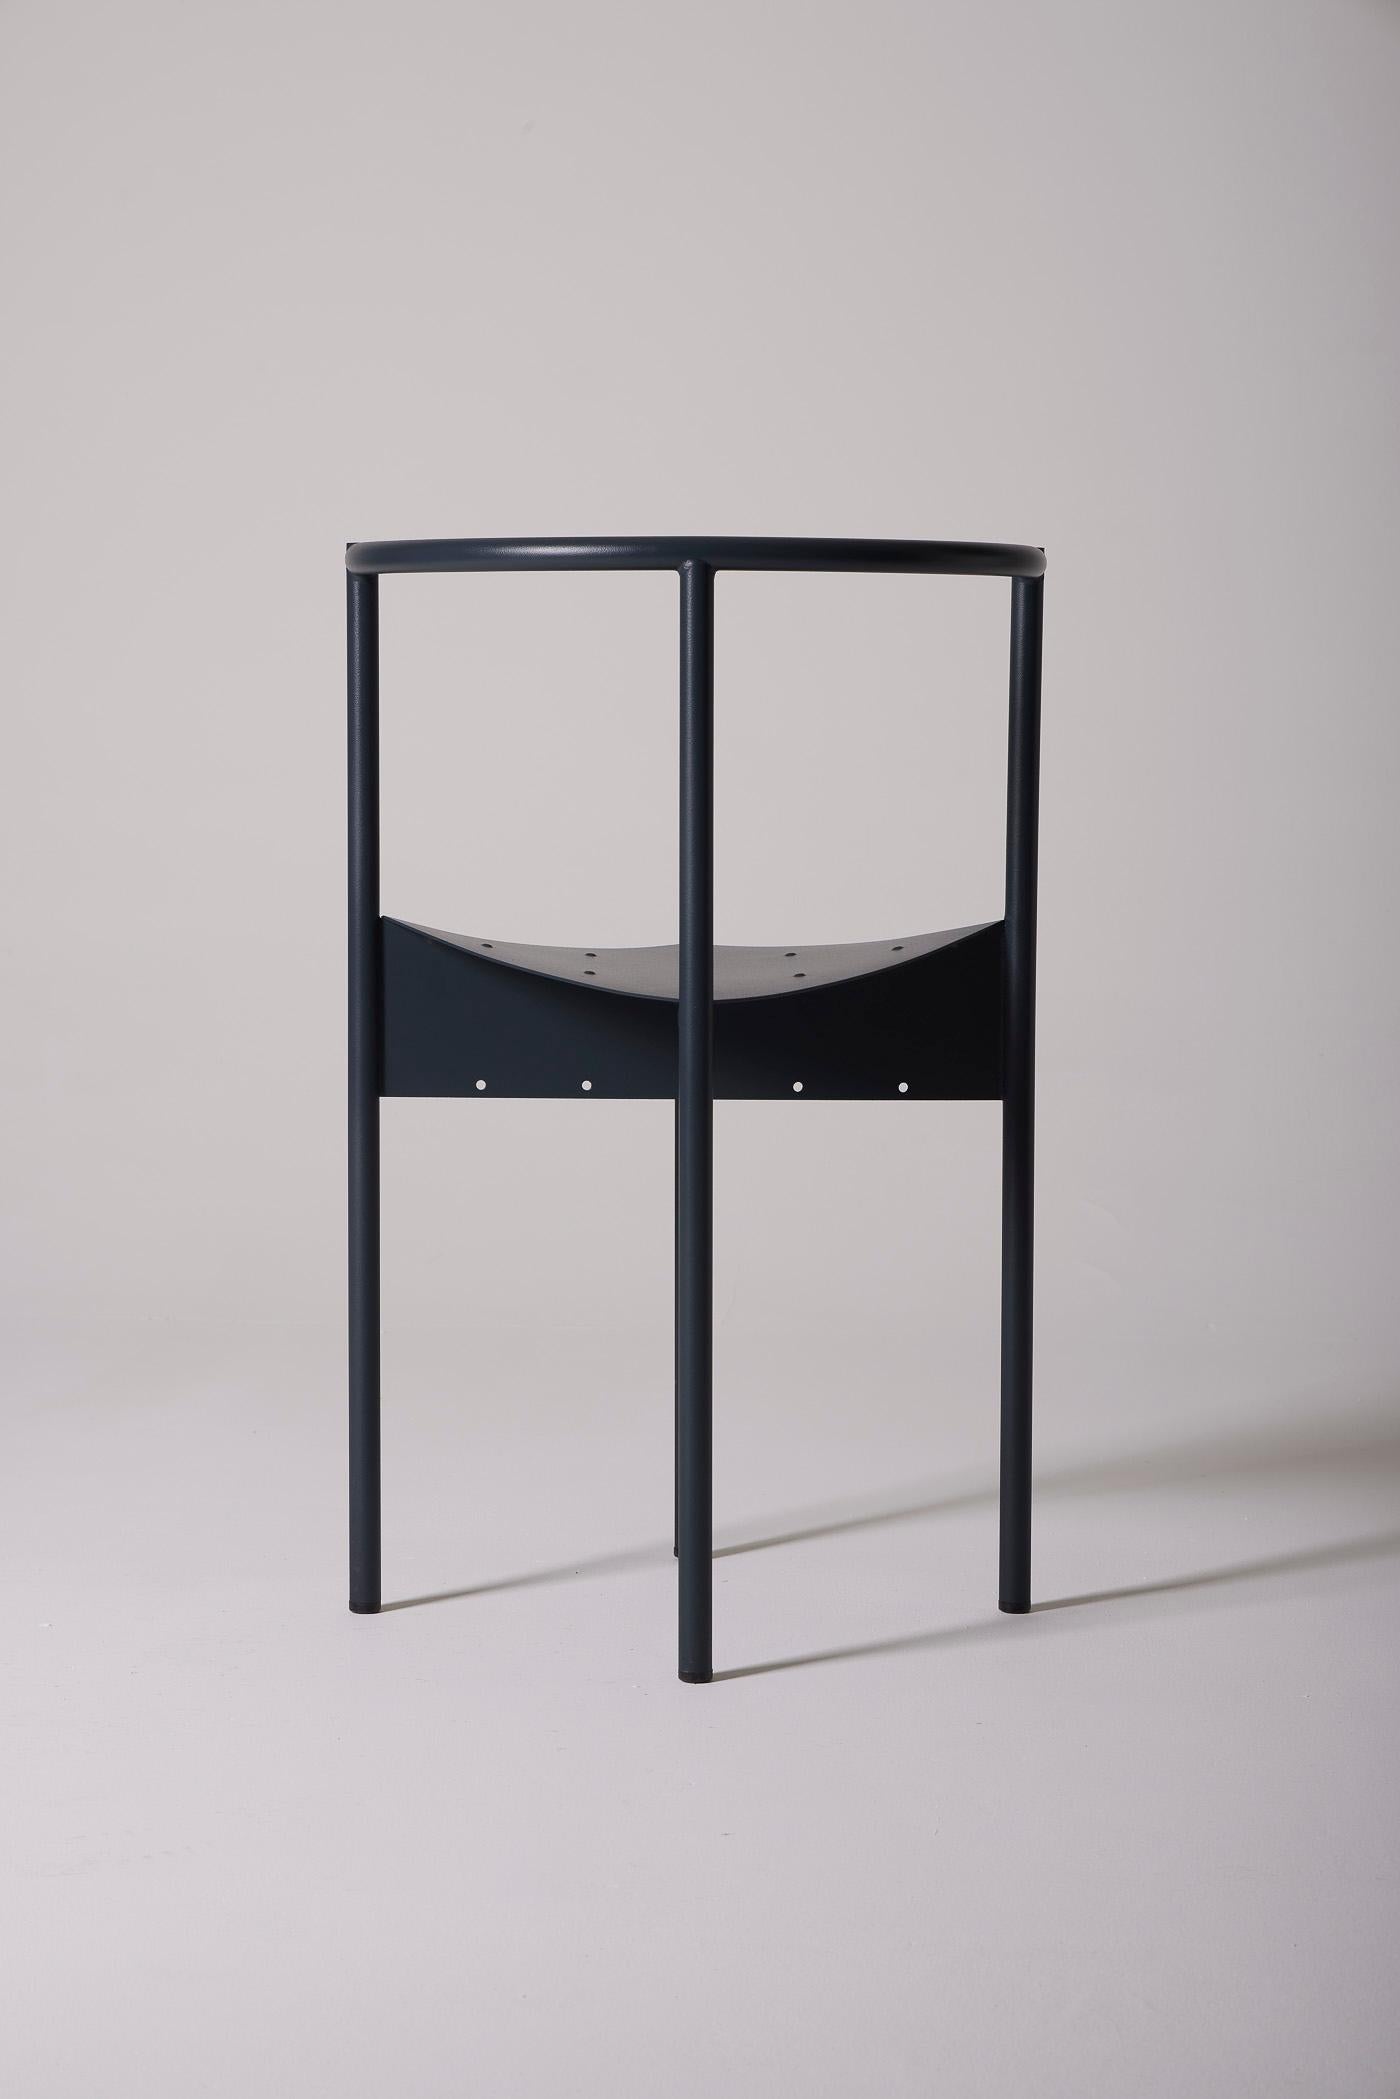 Late 20th Century Philippe Starck chair